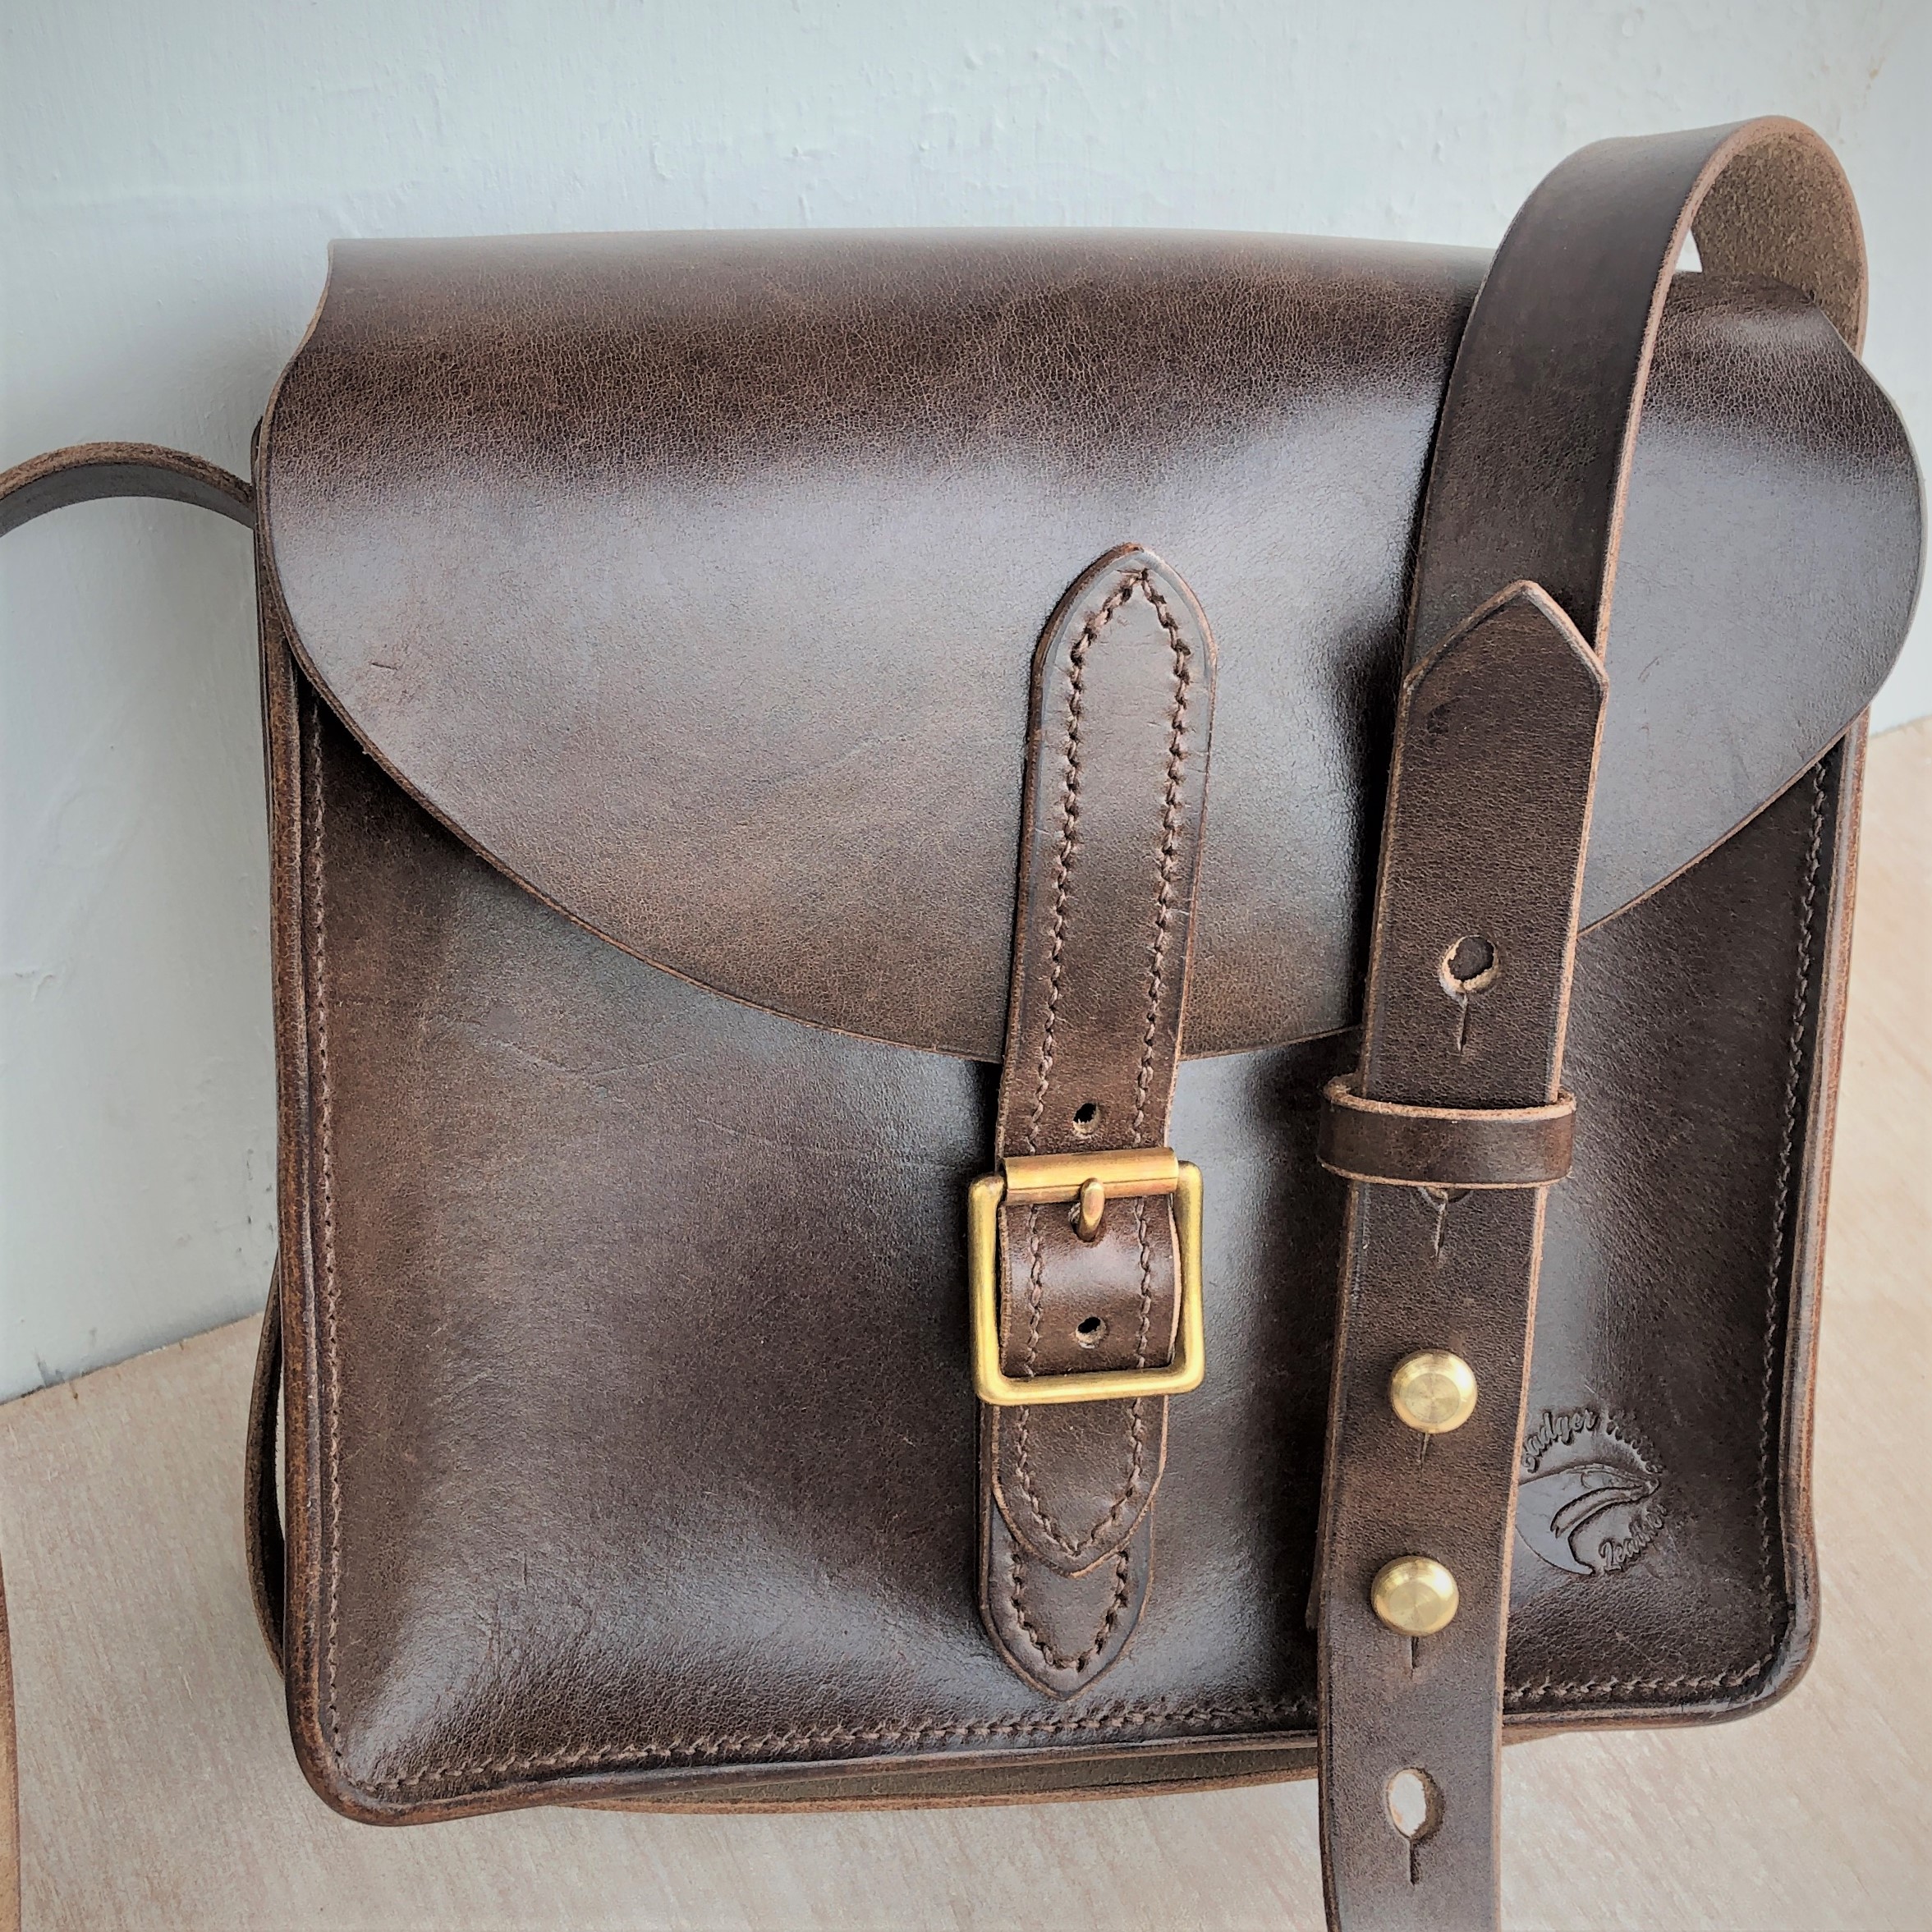 Boxy leather handbag